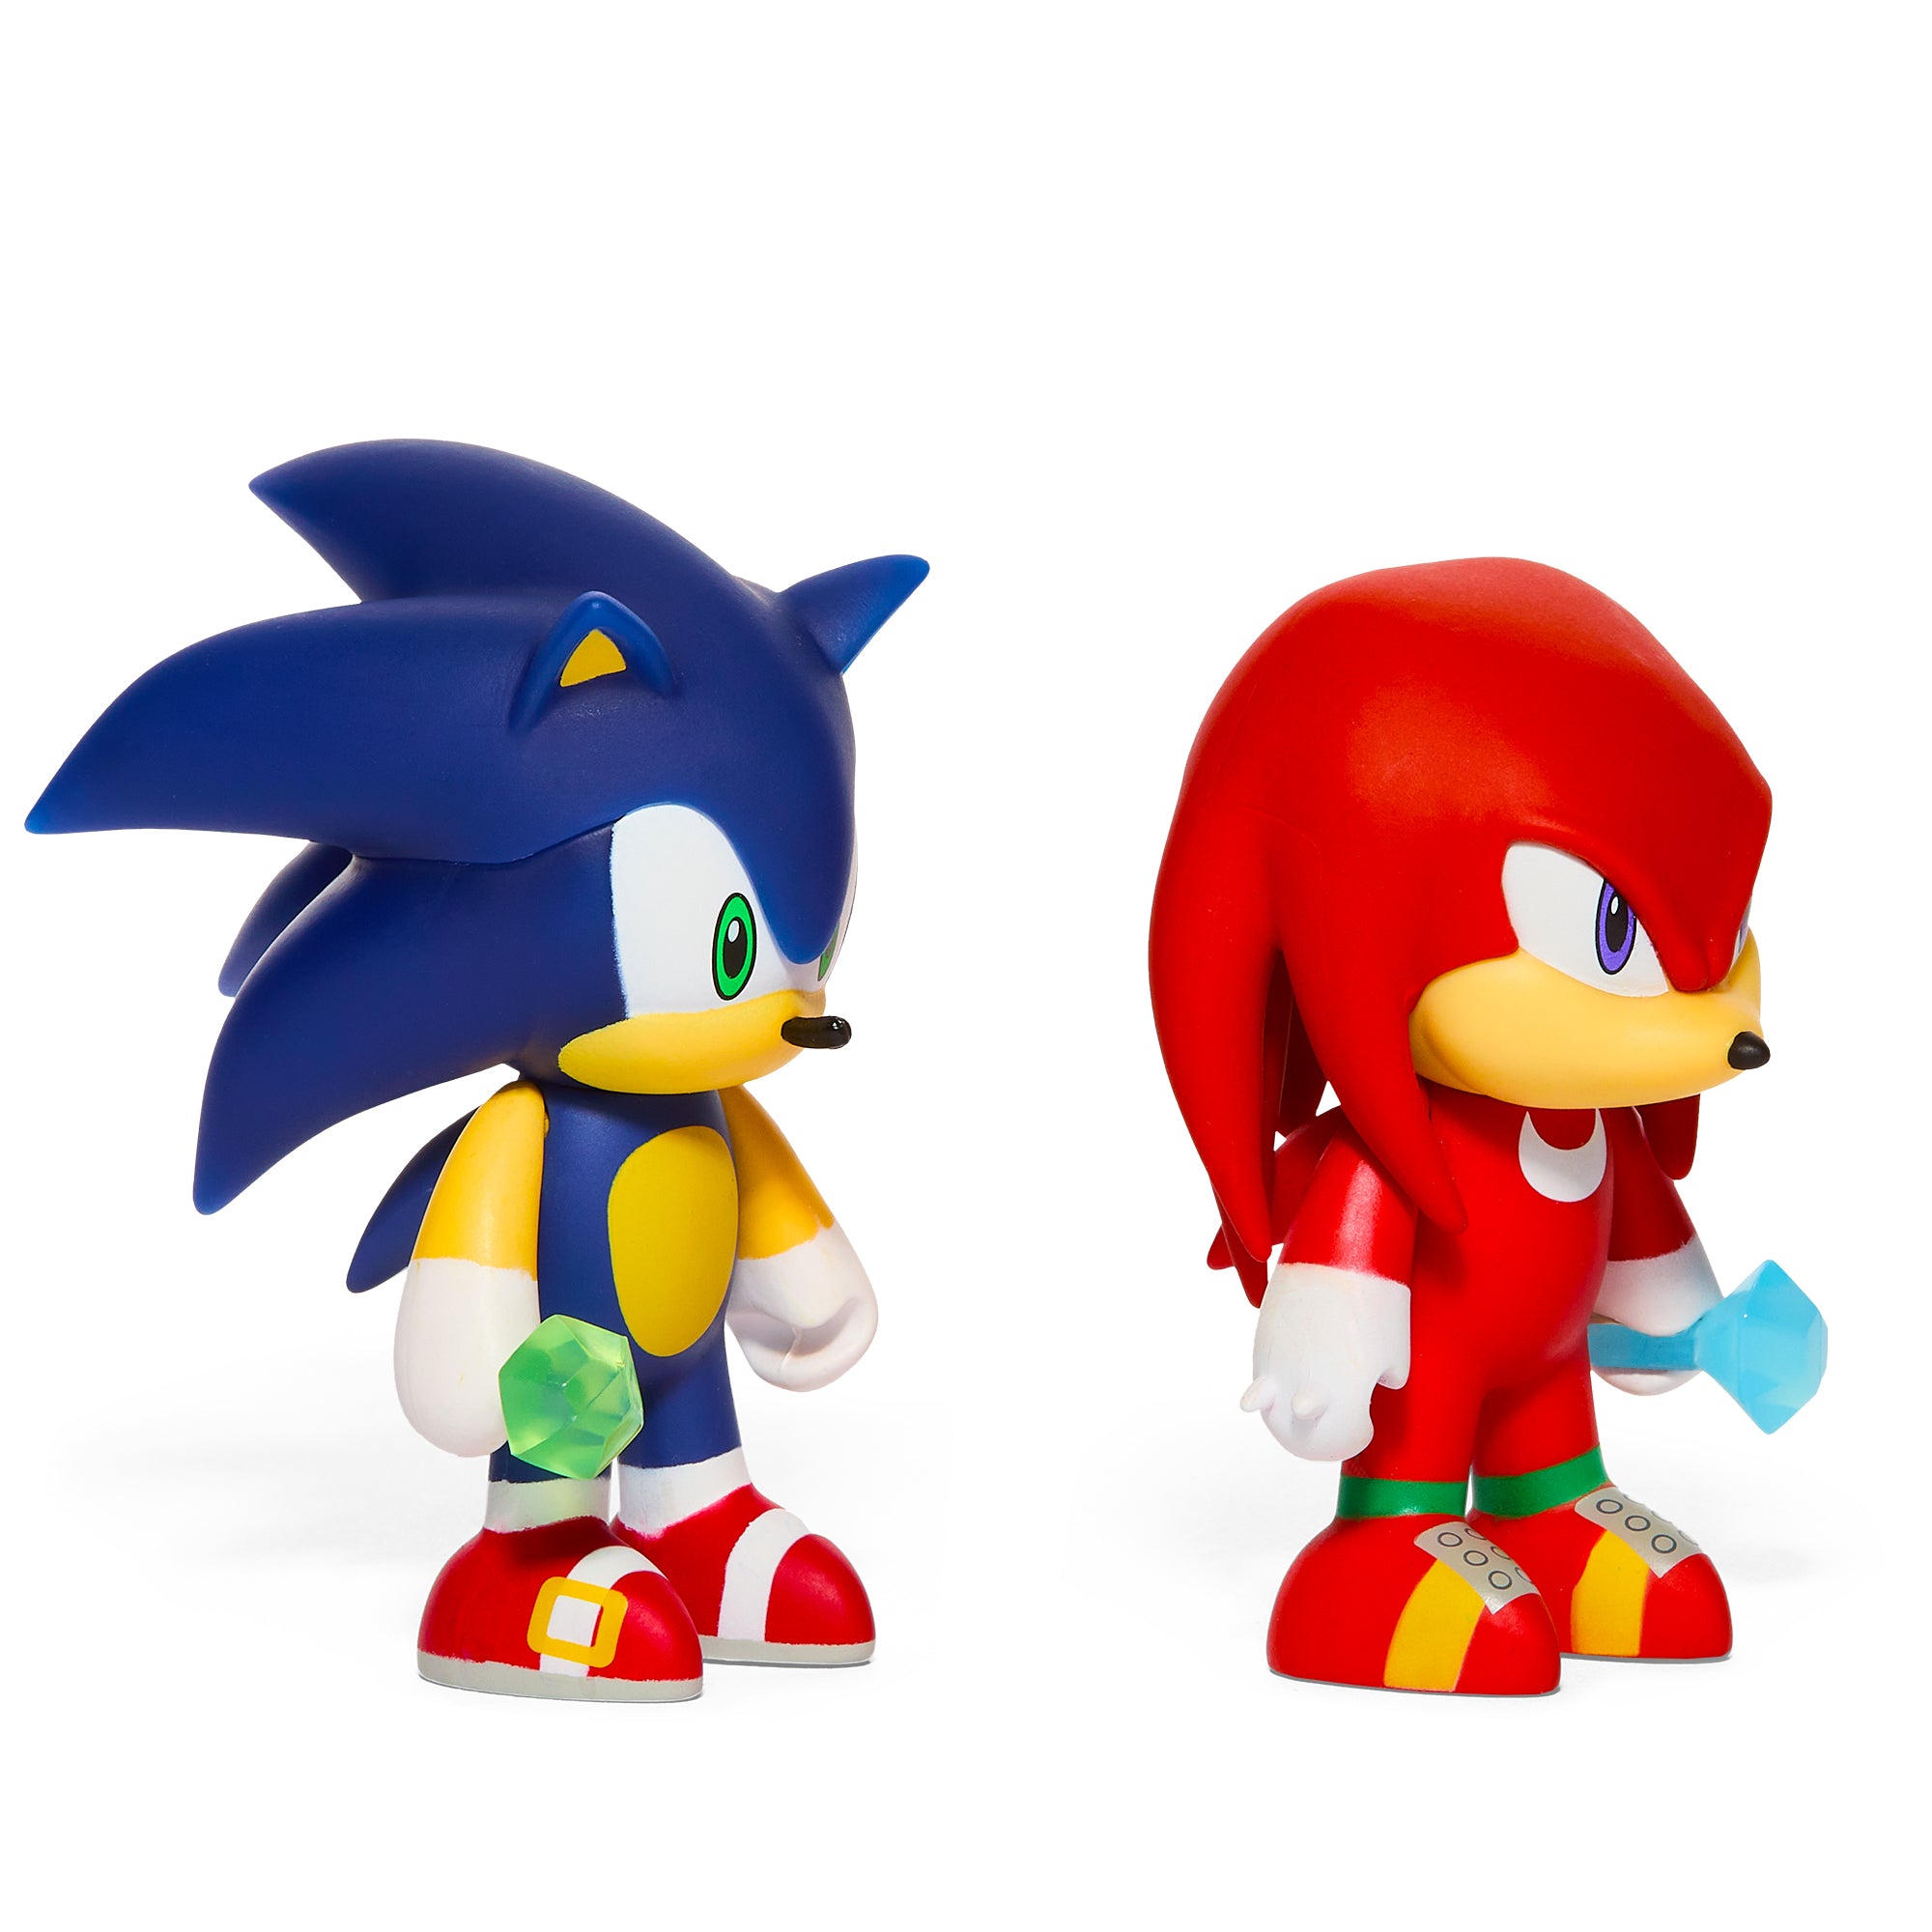 Mecha Sonic  Sonic & knuckles, Sonic, Classic sonic